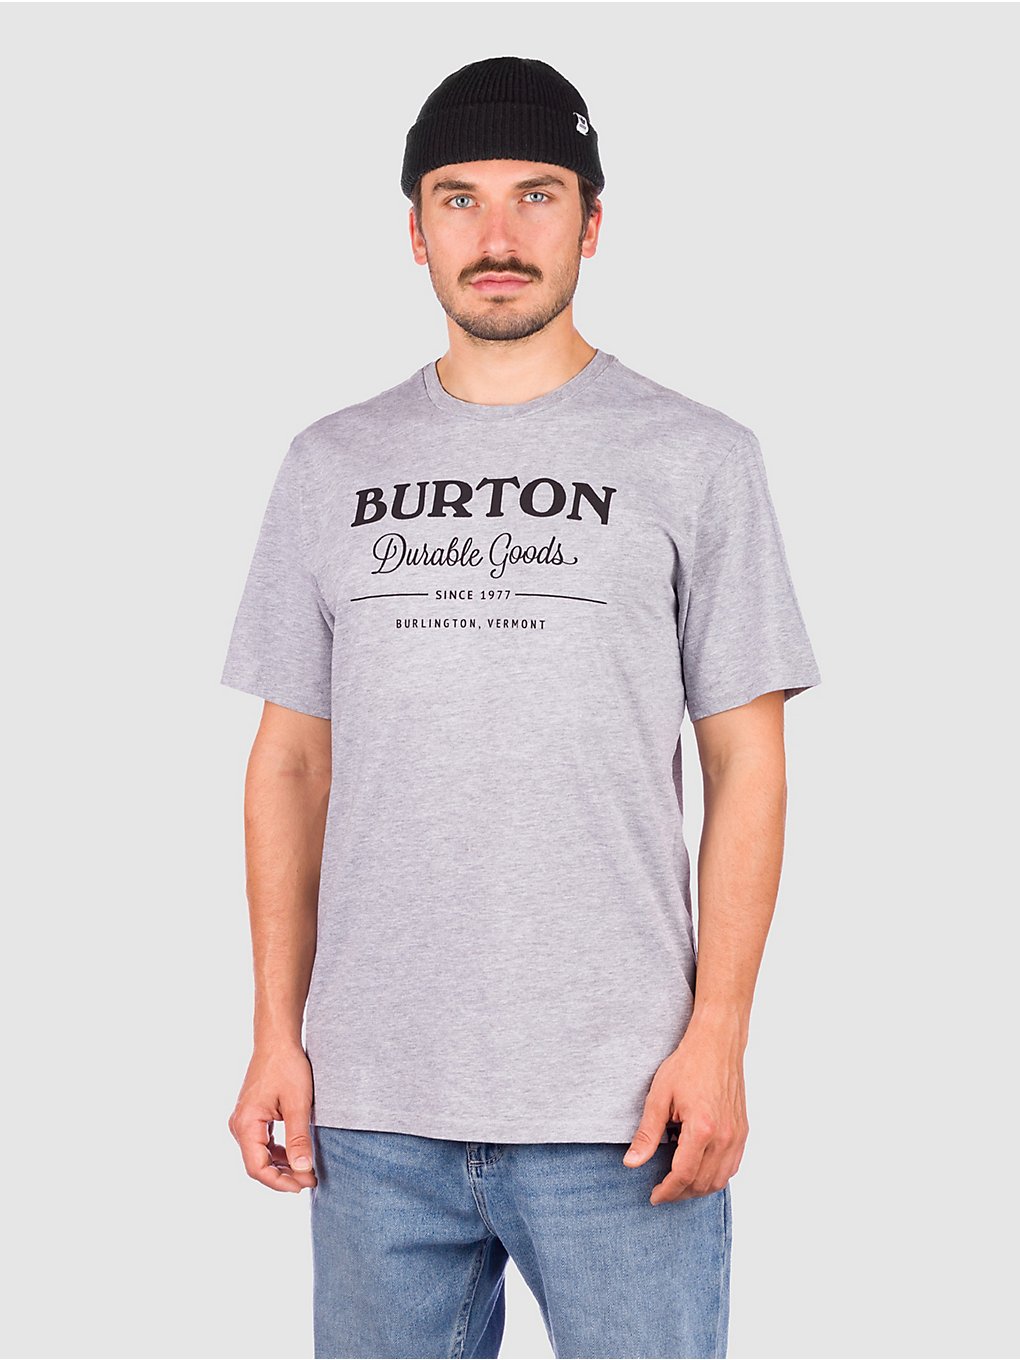 Burton Durable Goods T-Shirt gray heather kaufen